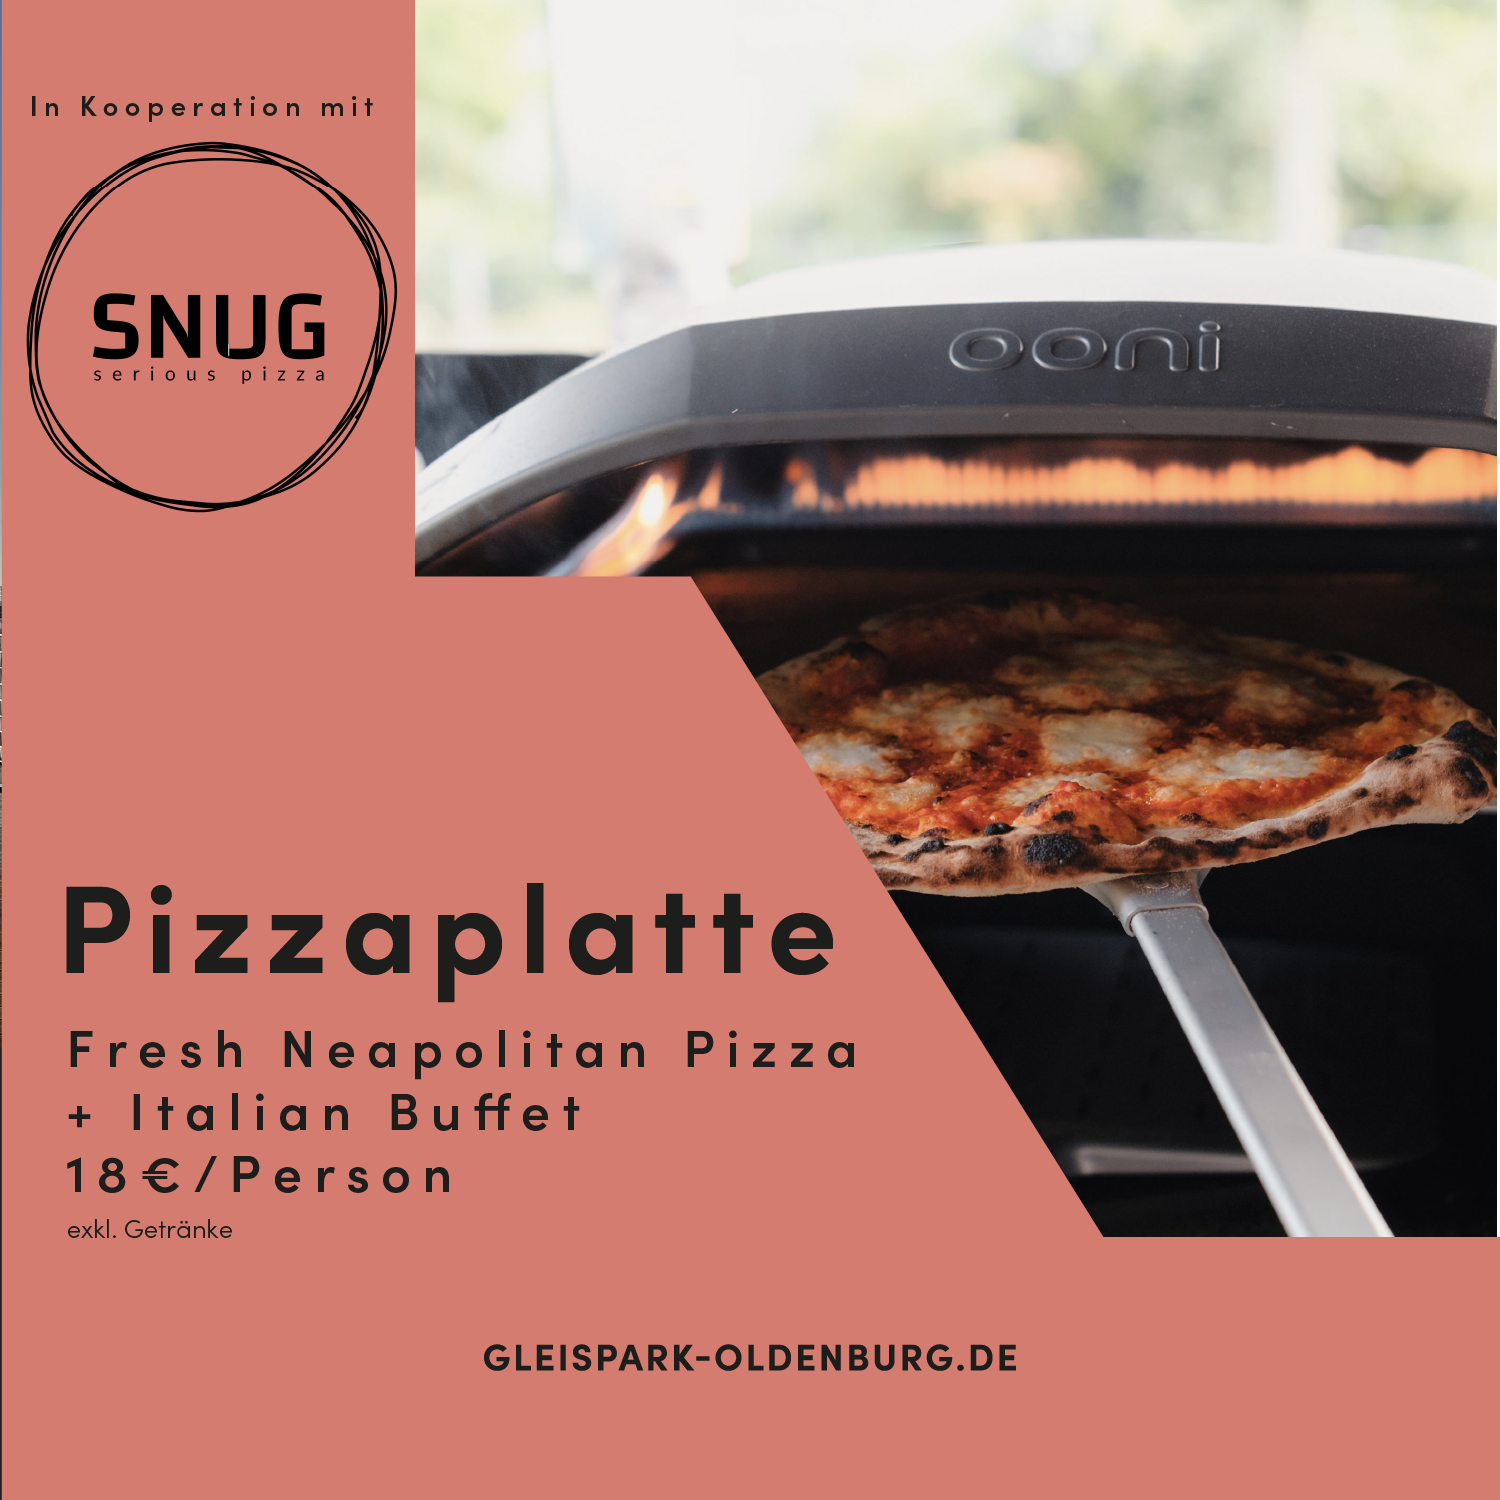 Pizzaplatte mit SNUG Pizza – Neapolitan Pizza